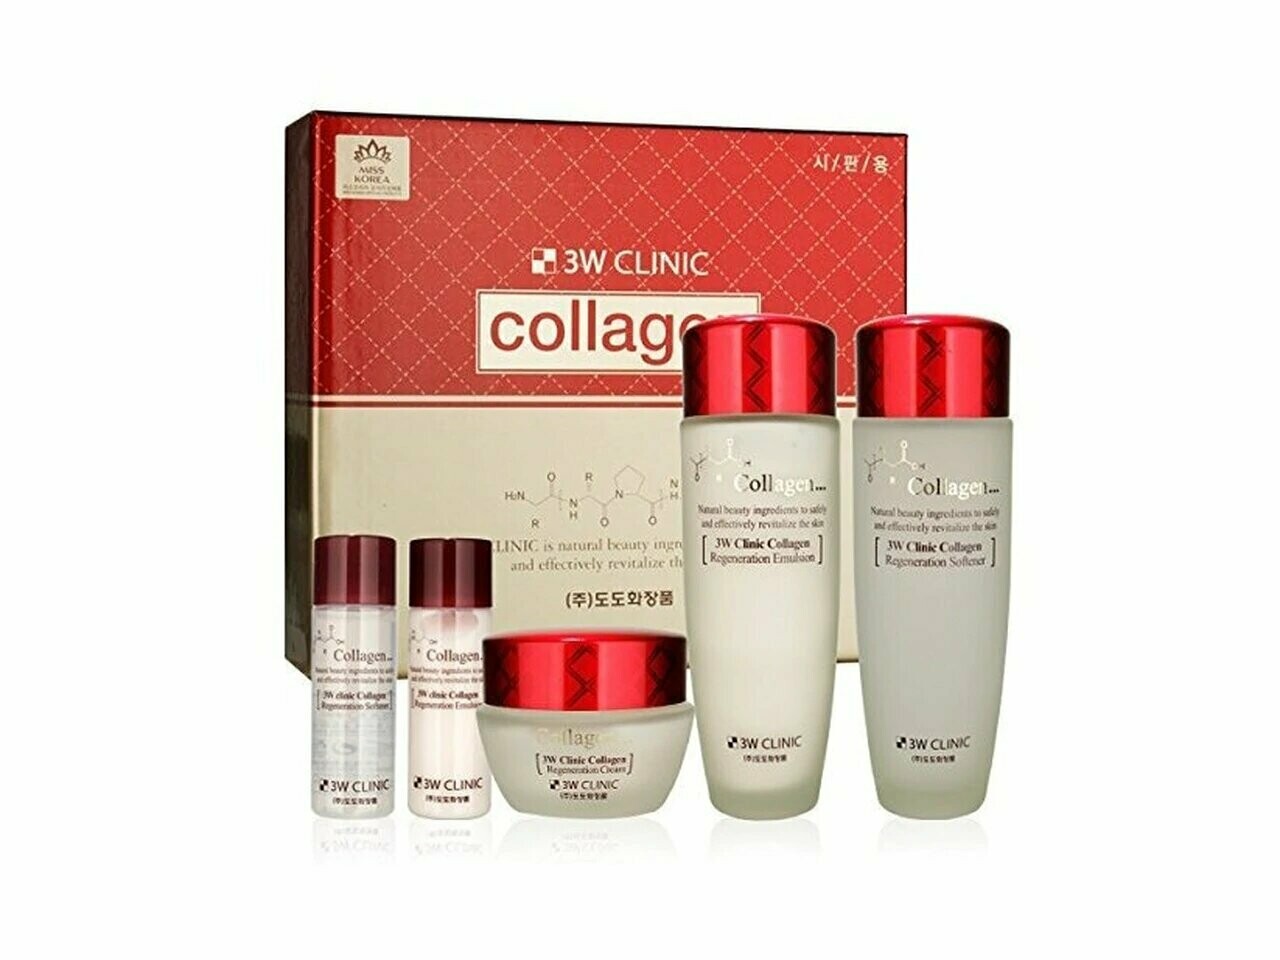 3W CLINIC Collagen Skin Care 3 Set